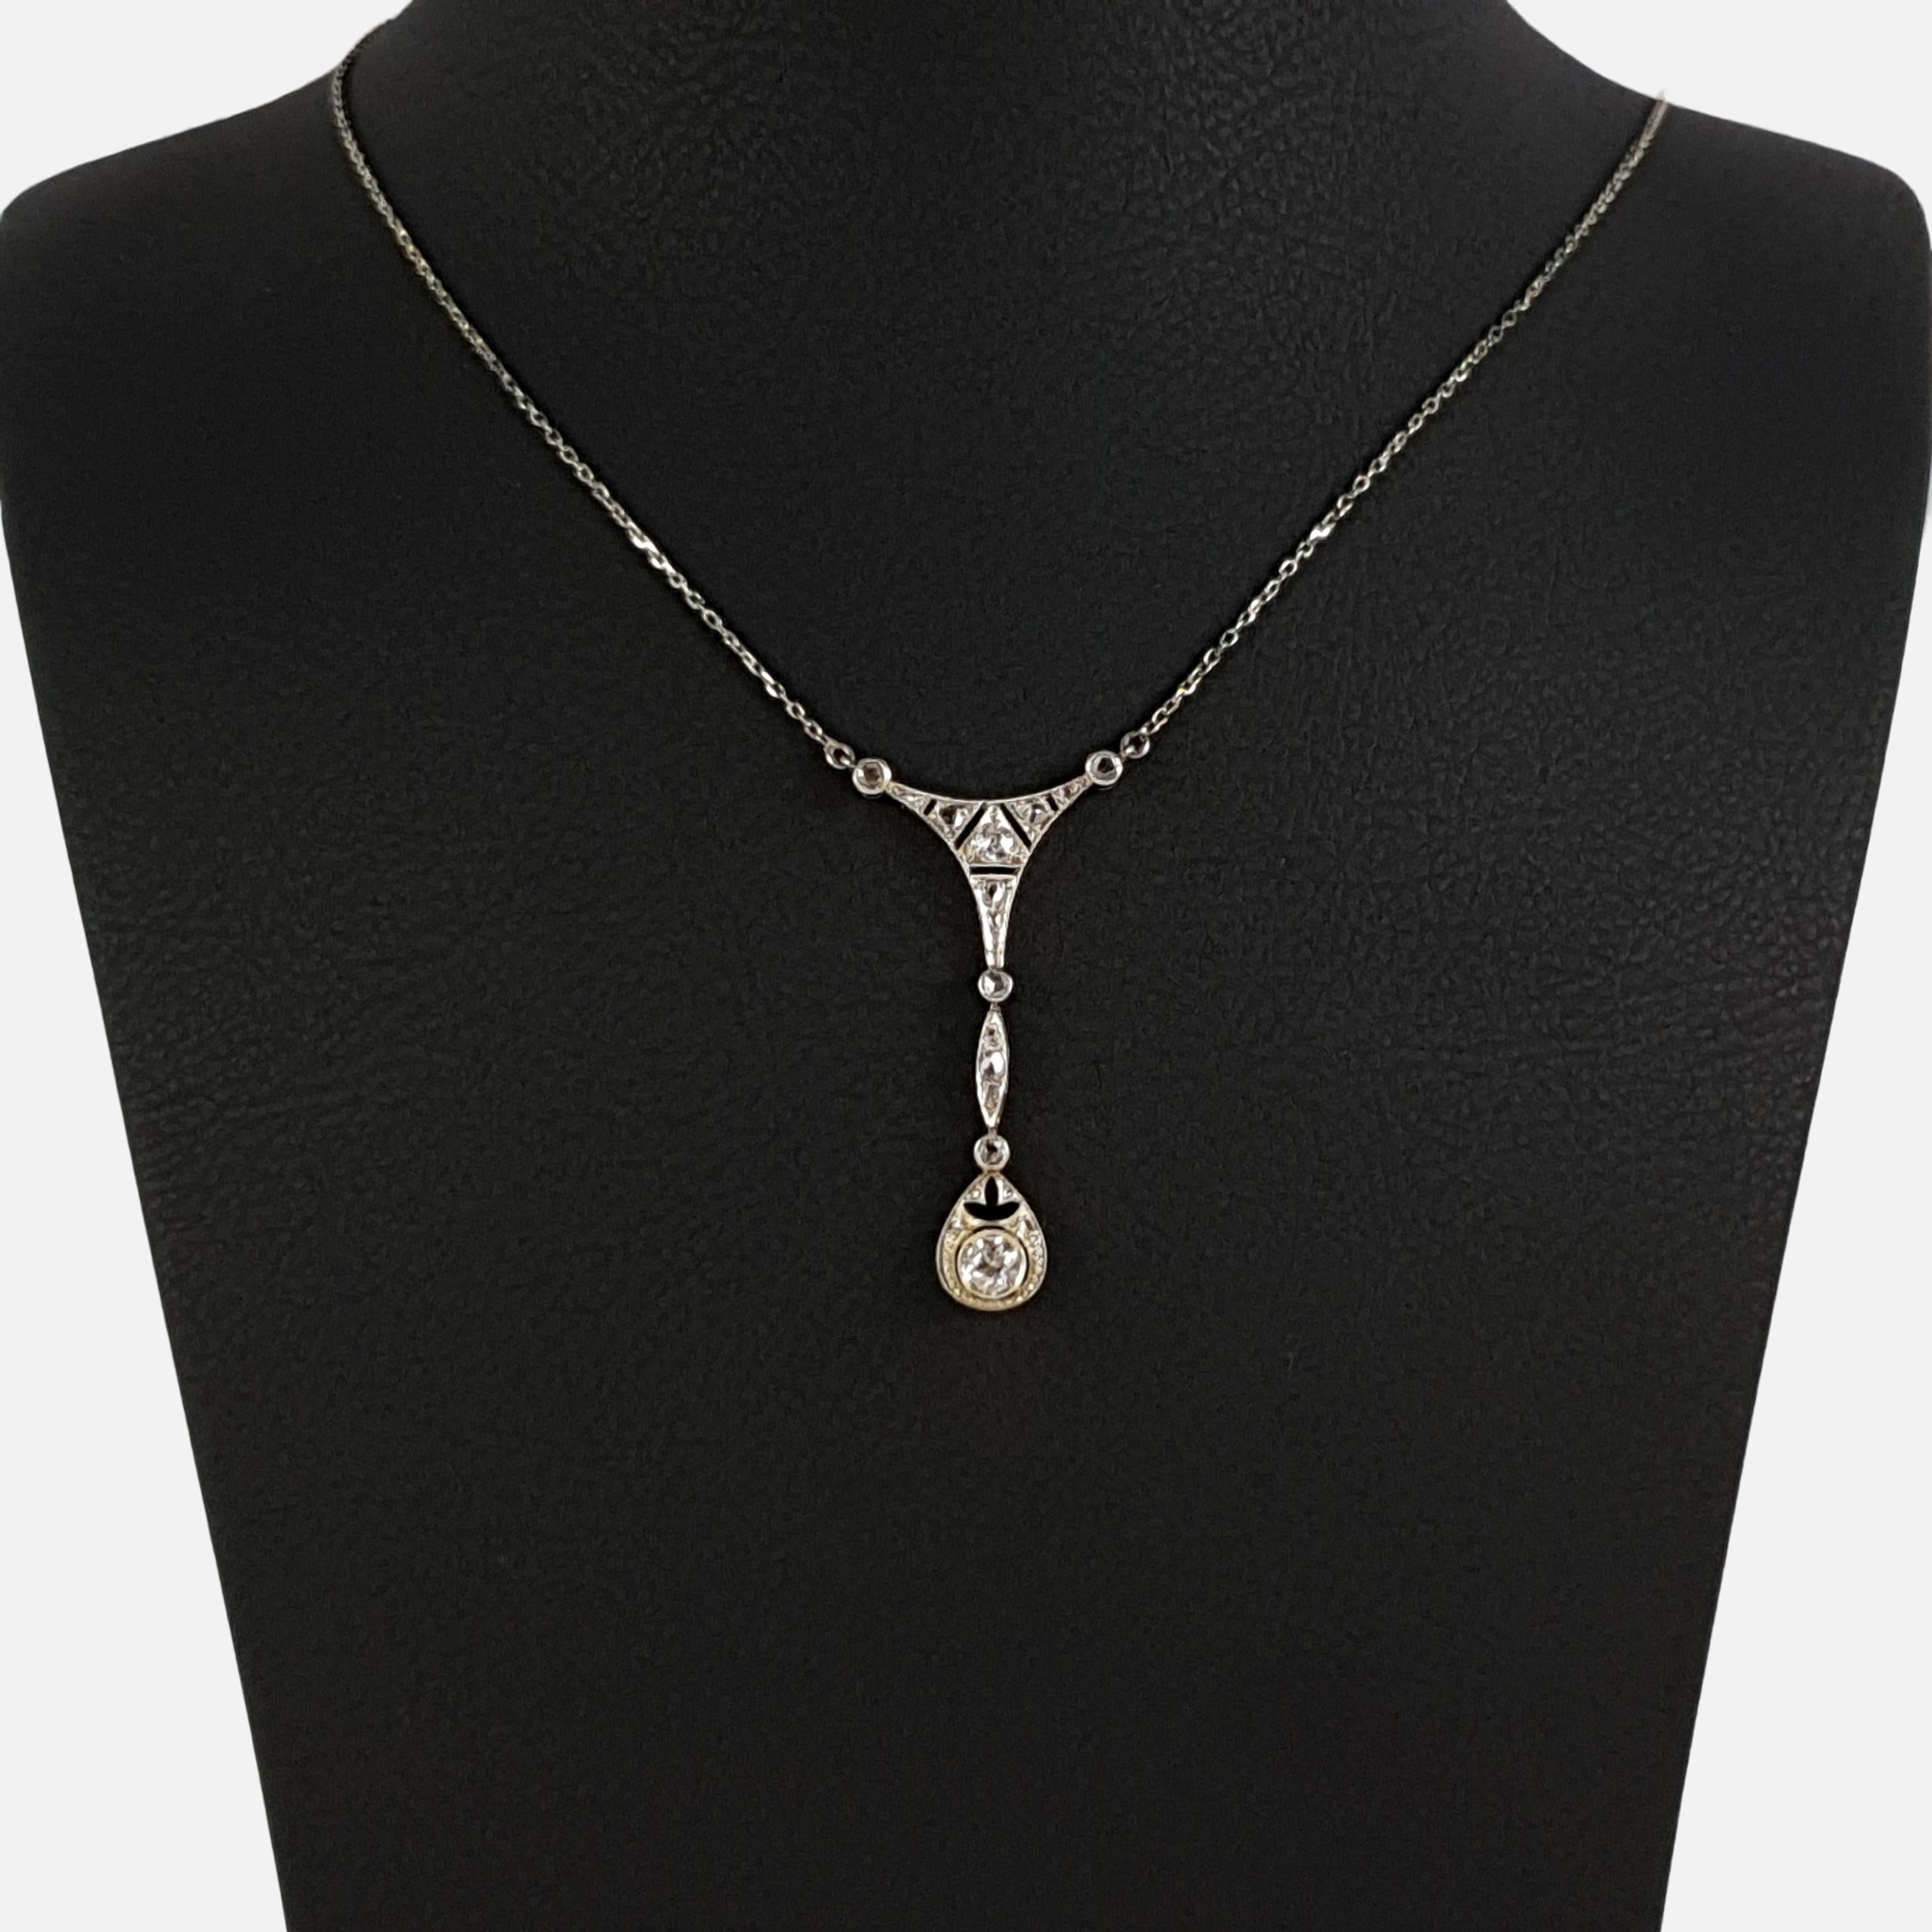 Edwardian Belle Époque White Gold and Diamond Pendant Necklace, circa 1905